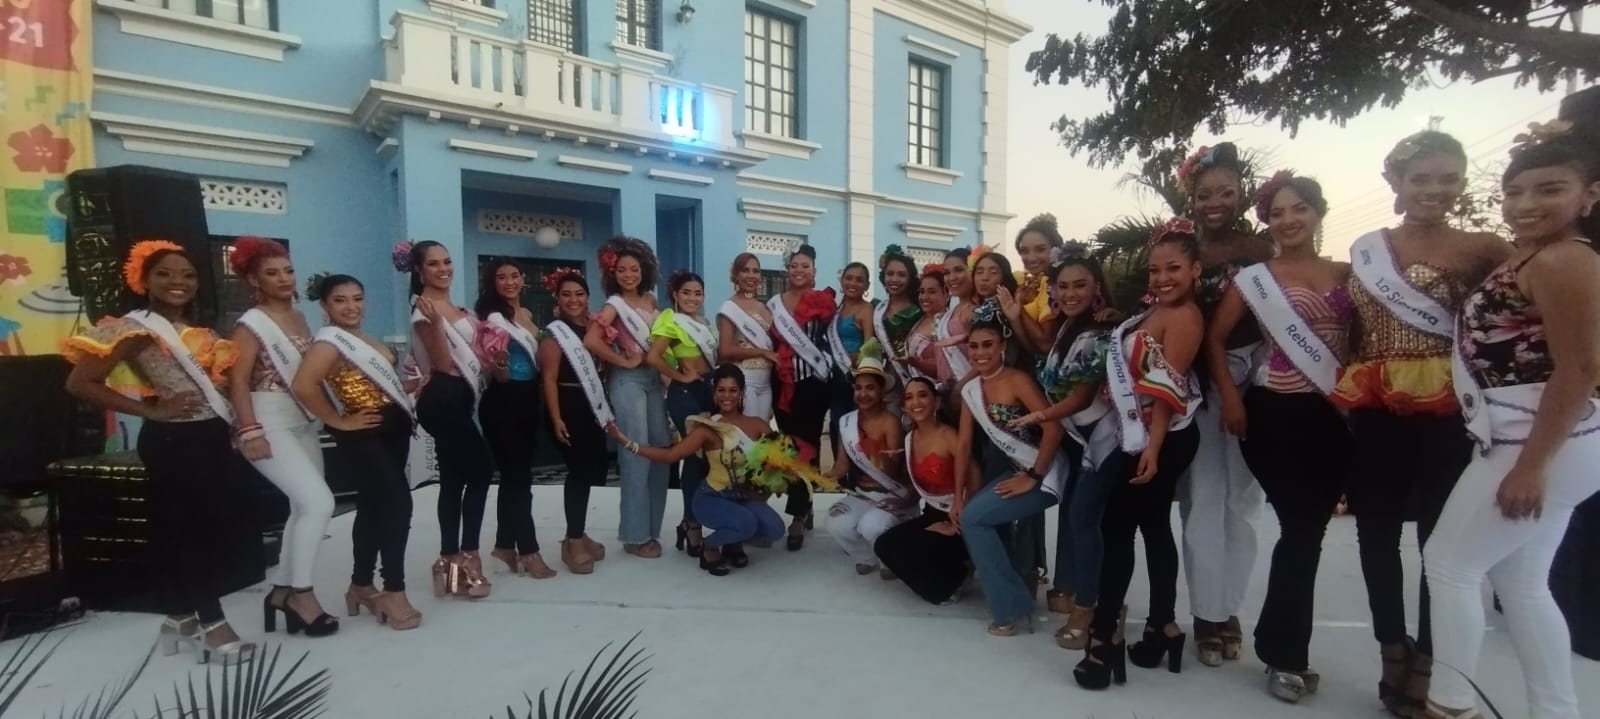 Se llevó acabó la Izada Bandera del Carnaval en la intendencia fluvial de Barranquilla